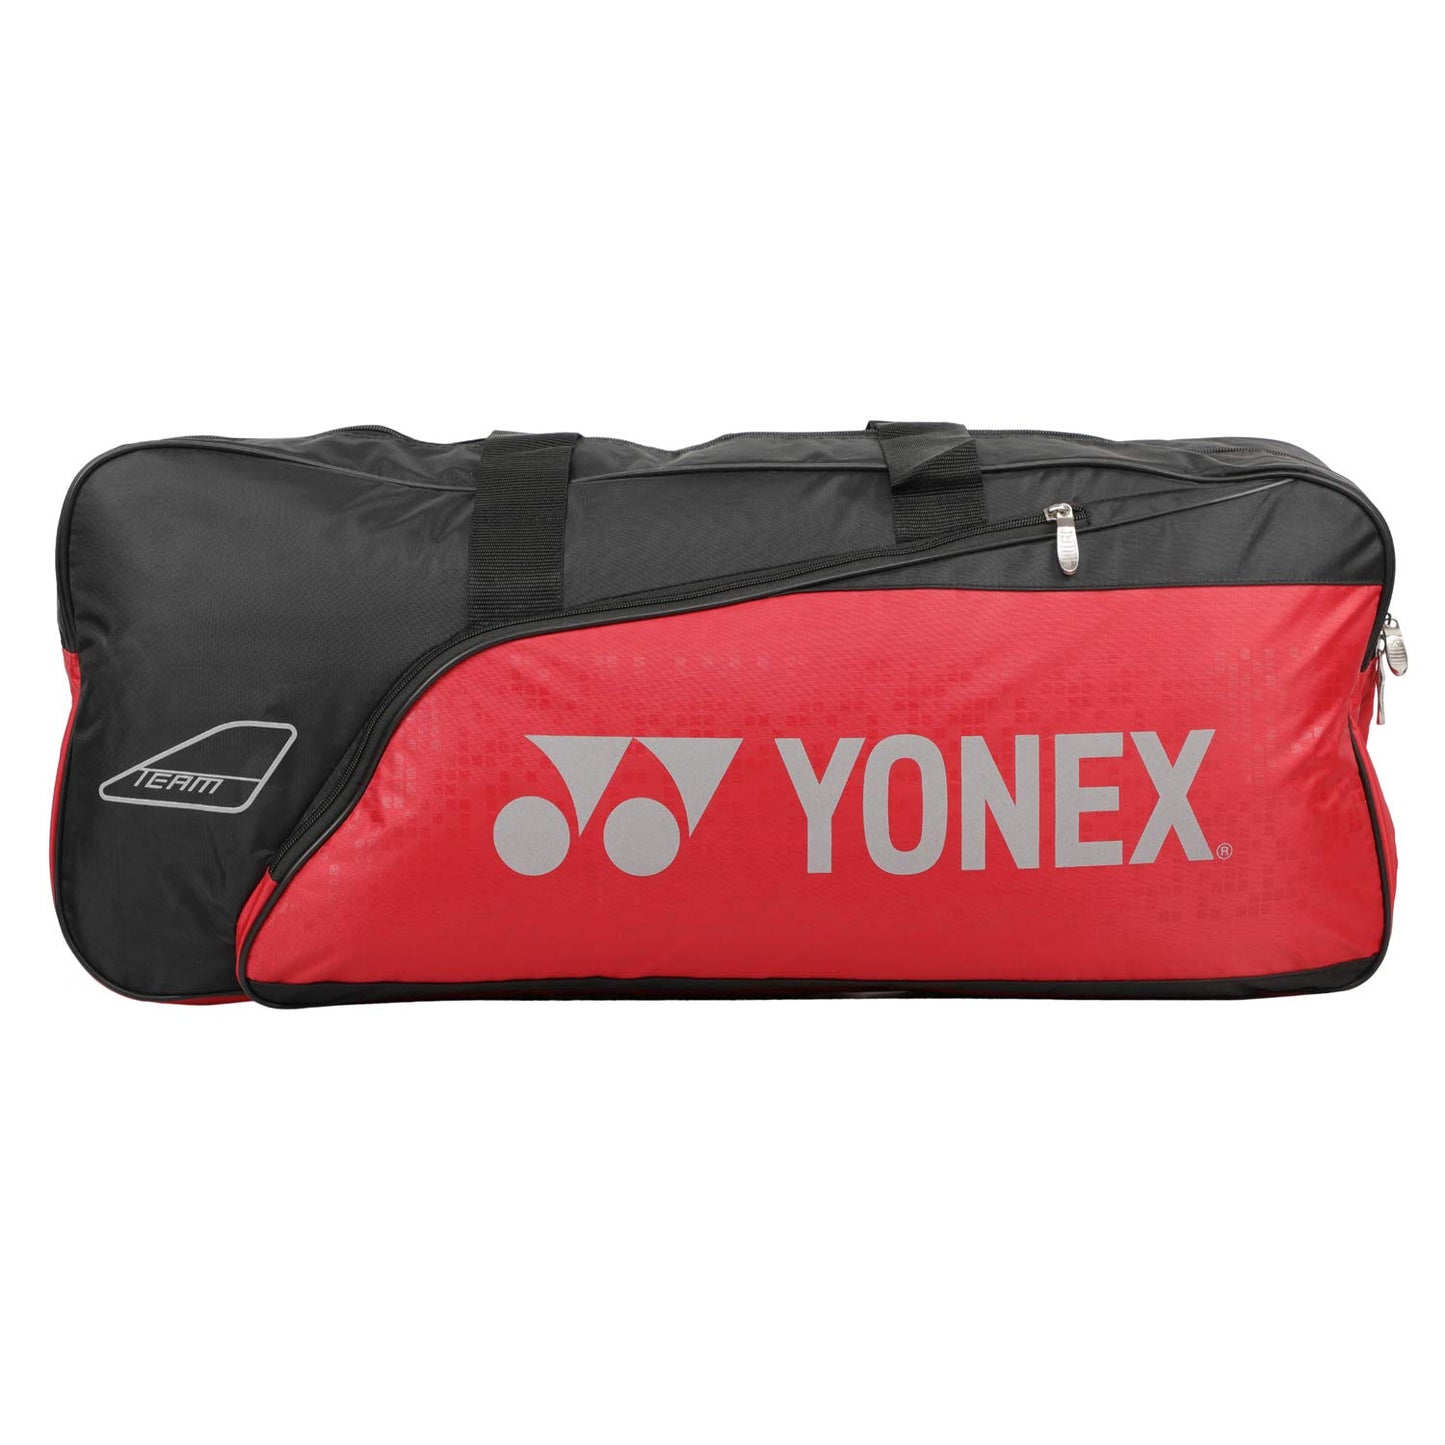 Yonex SUNR4911TH Team Tournament Badminton Kitbag, Red - Best Price online Prokicksports.com